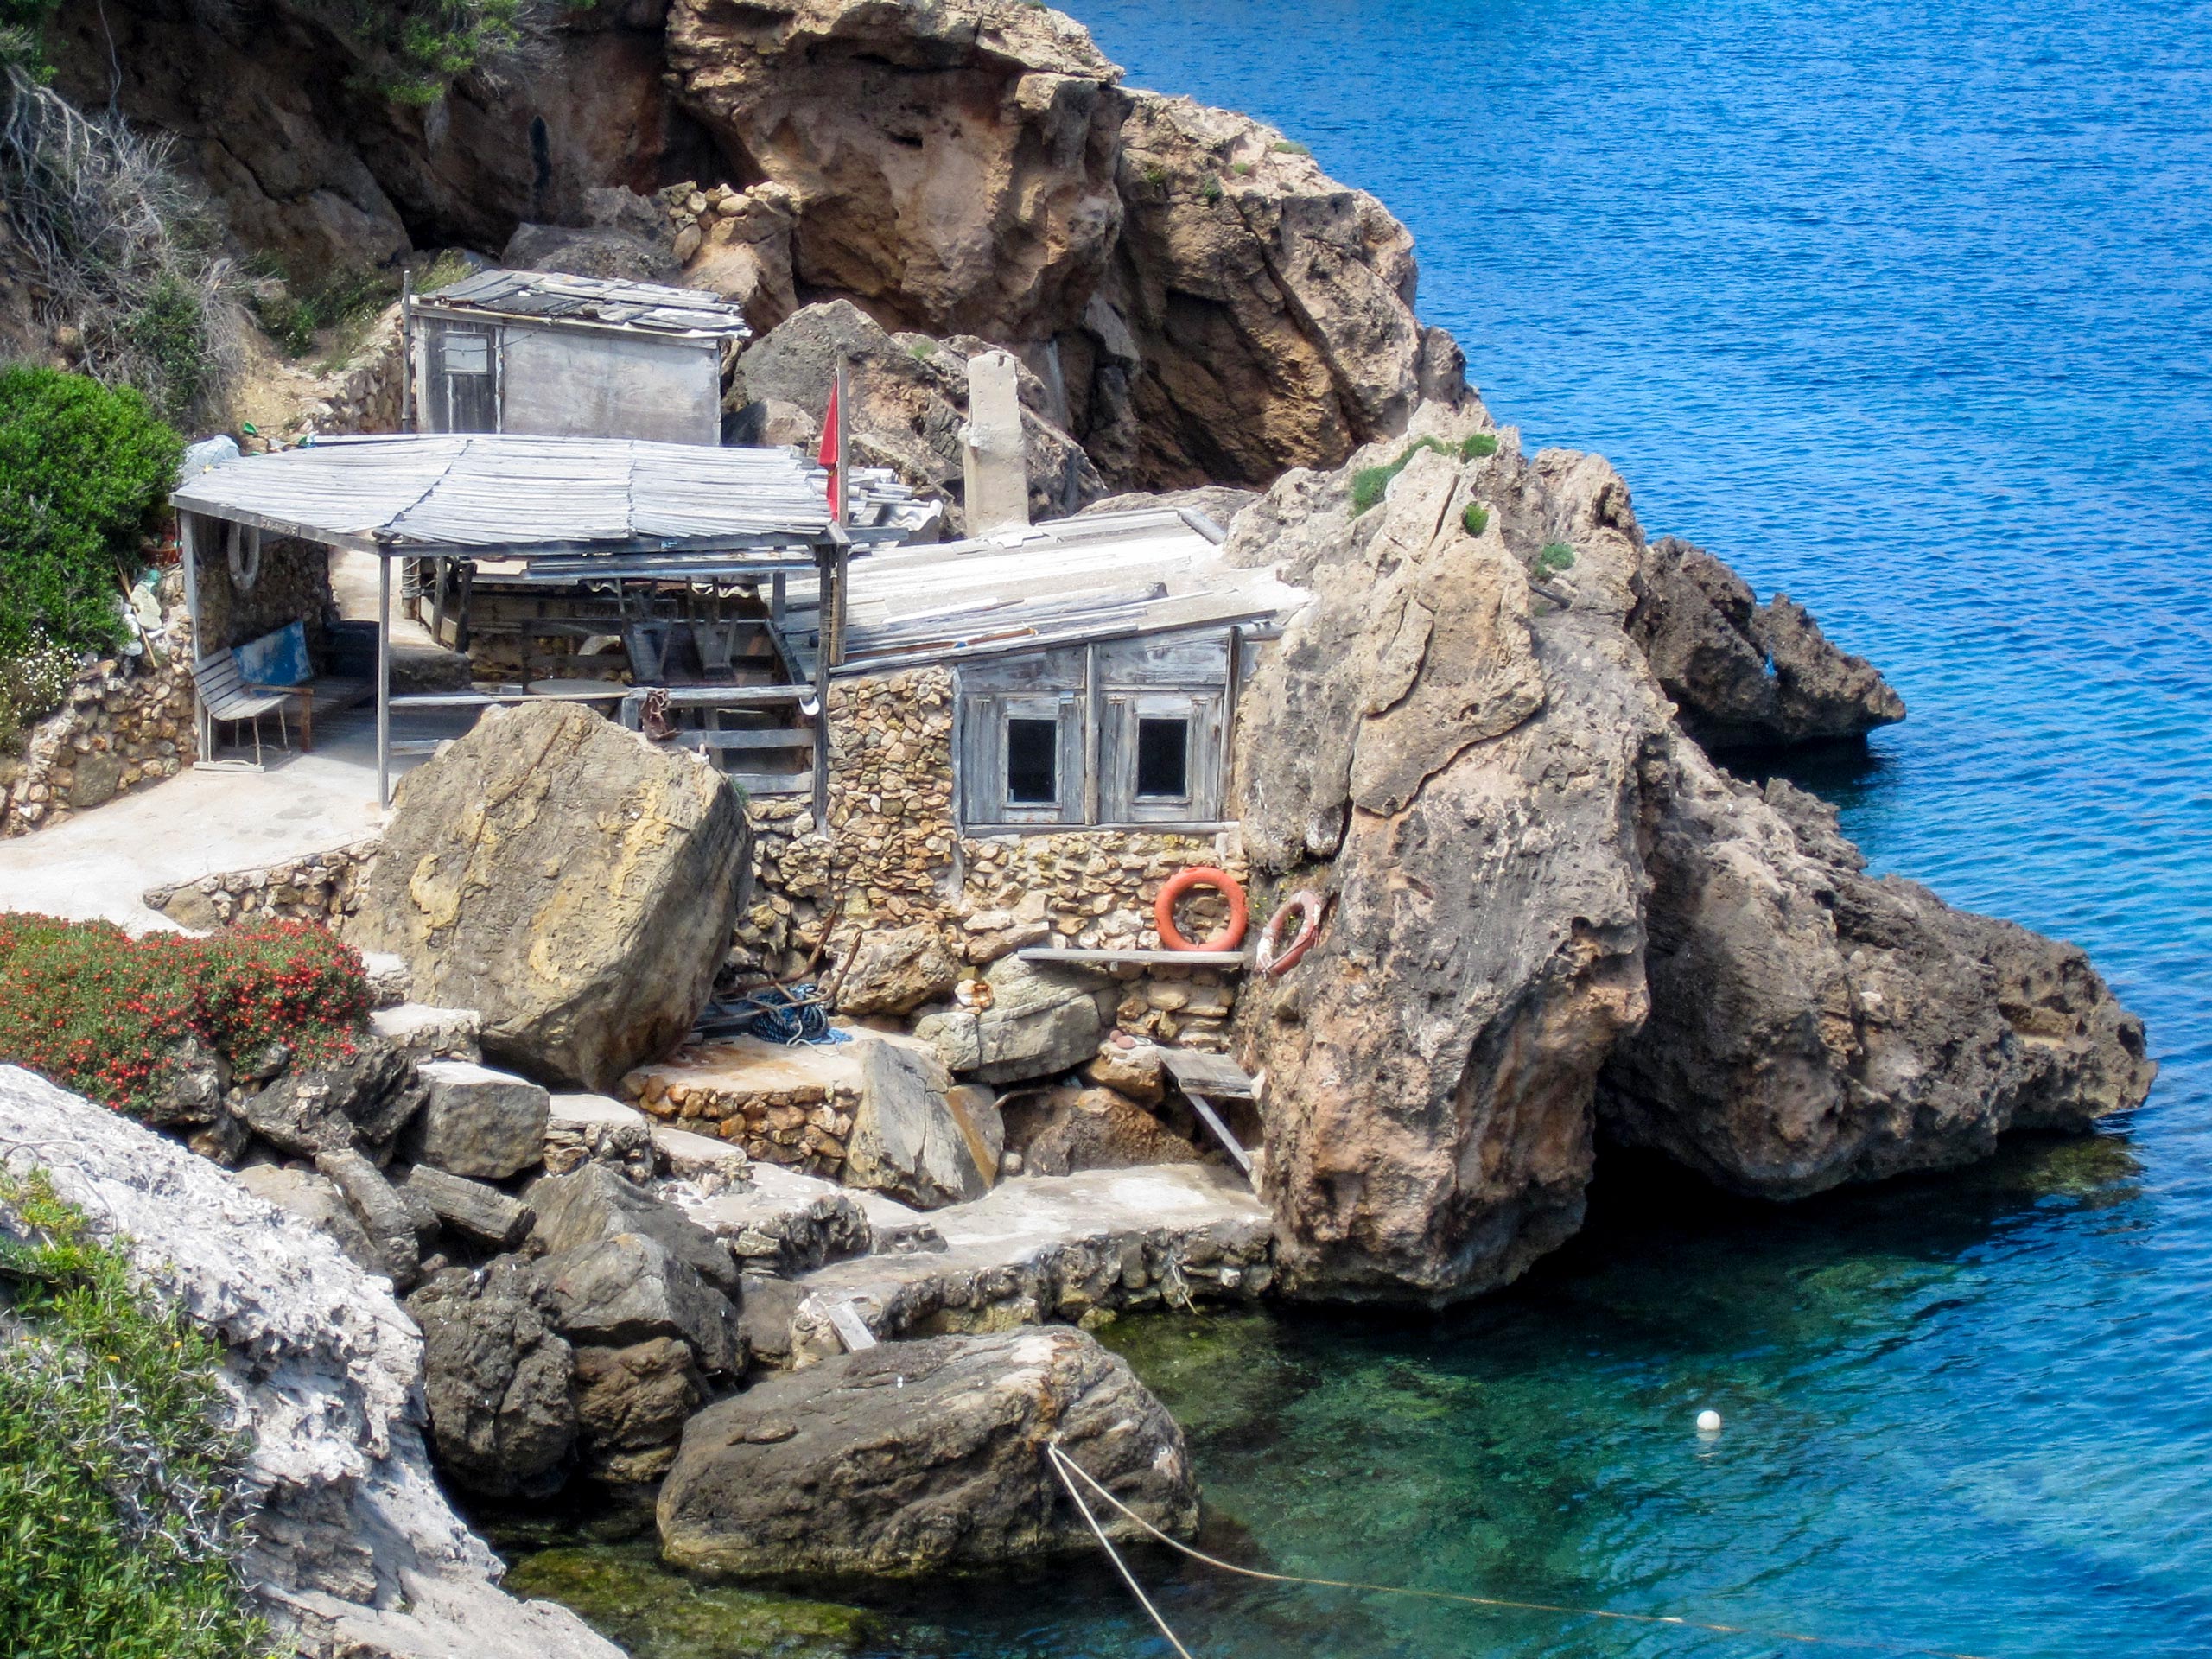 Fishermens cabin by the ocean walking tour Menorca Spain